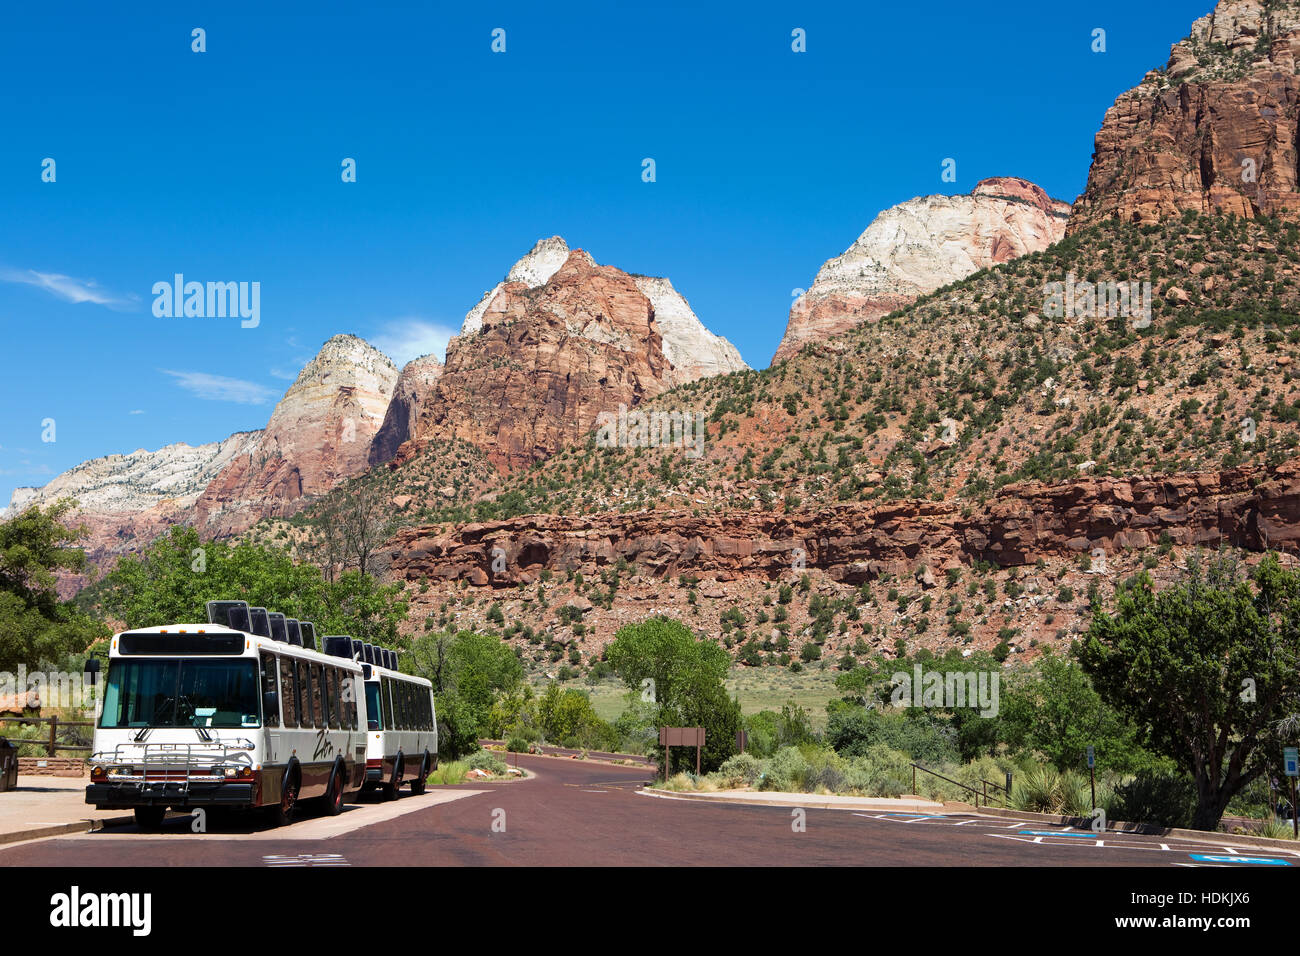 Shuttle-Busse warten, um Touristen im Zion Nationalpark, Utah, USA abholen. Stockfoto